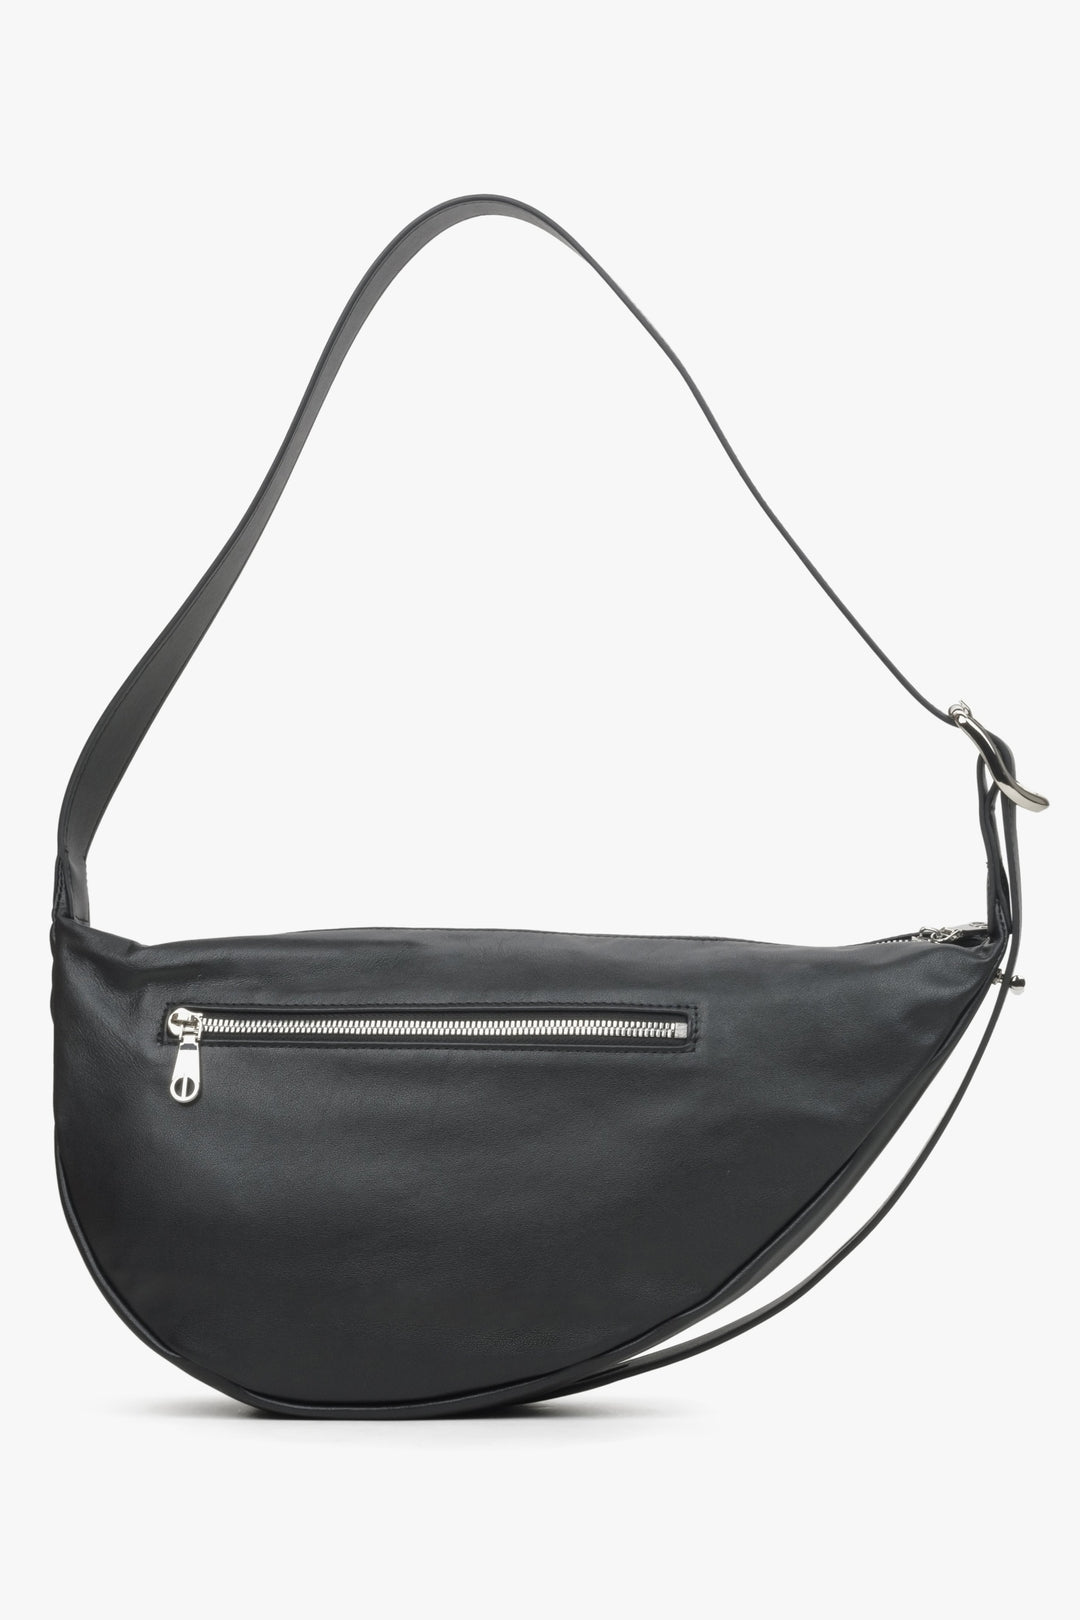 Women's black leather Estro shoulder bag - back view of the model.